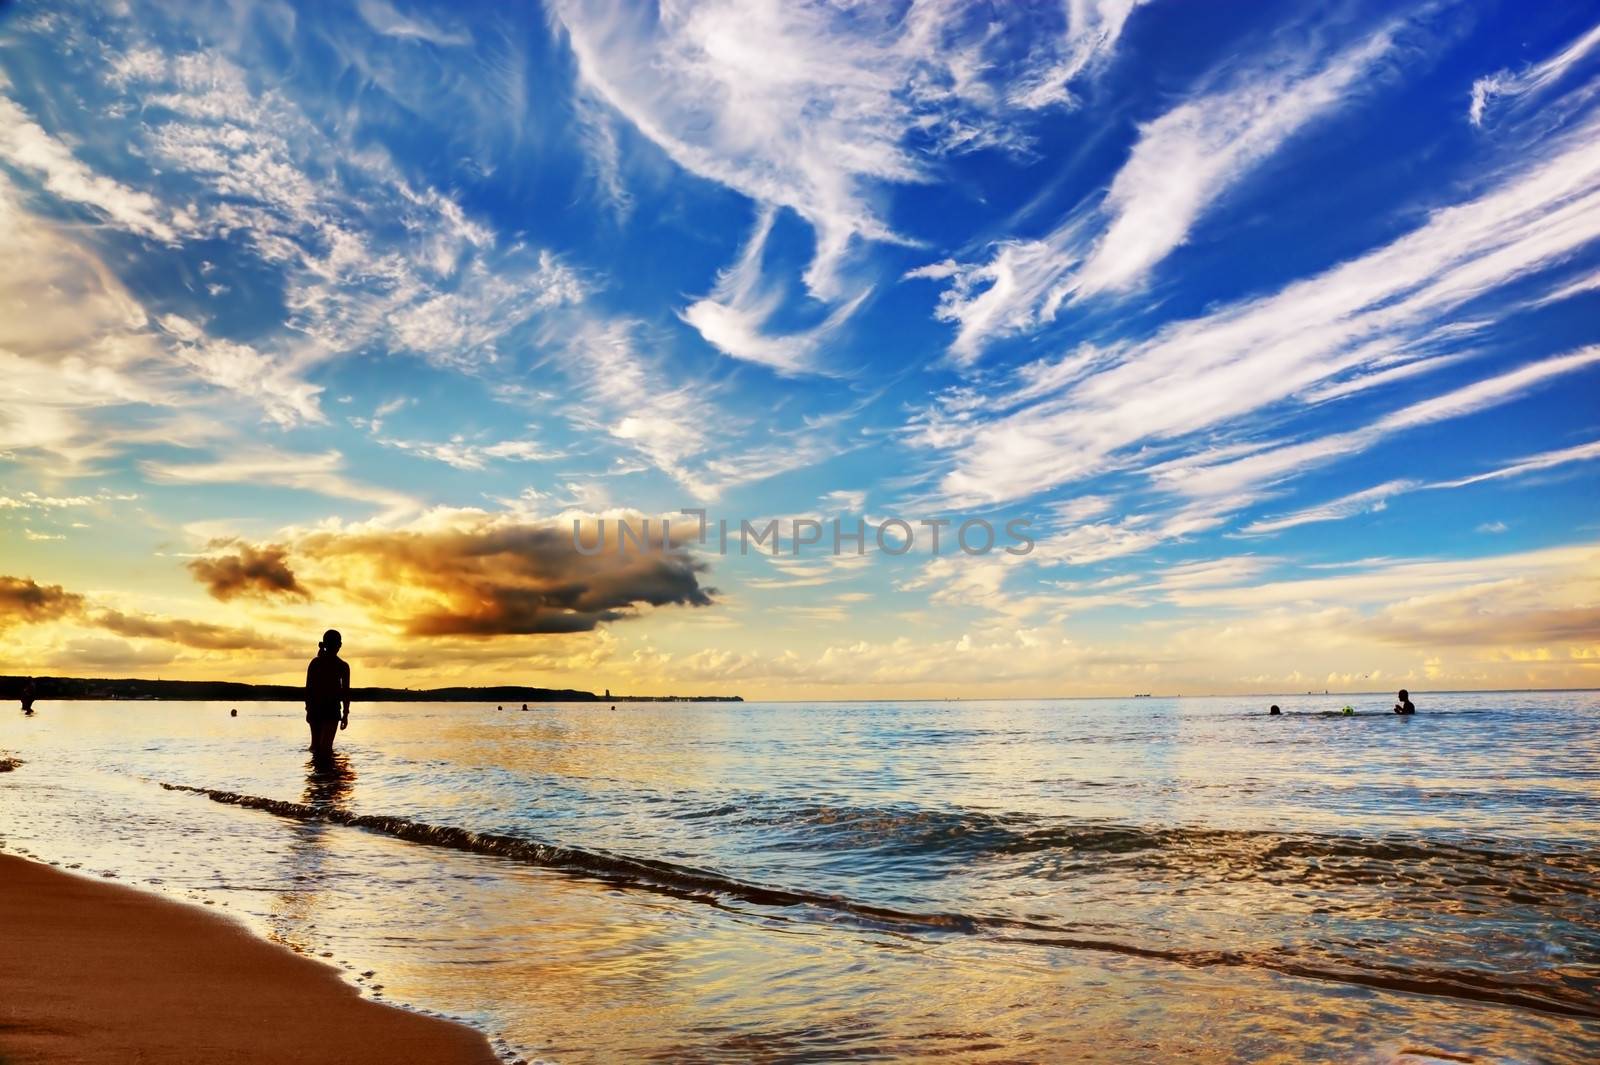 Woman standing in calm ocean under dramatic sunset sky. Summertime